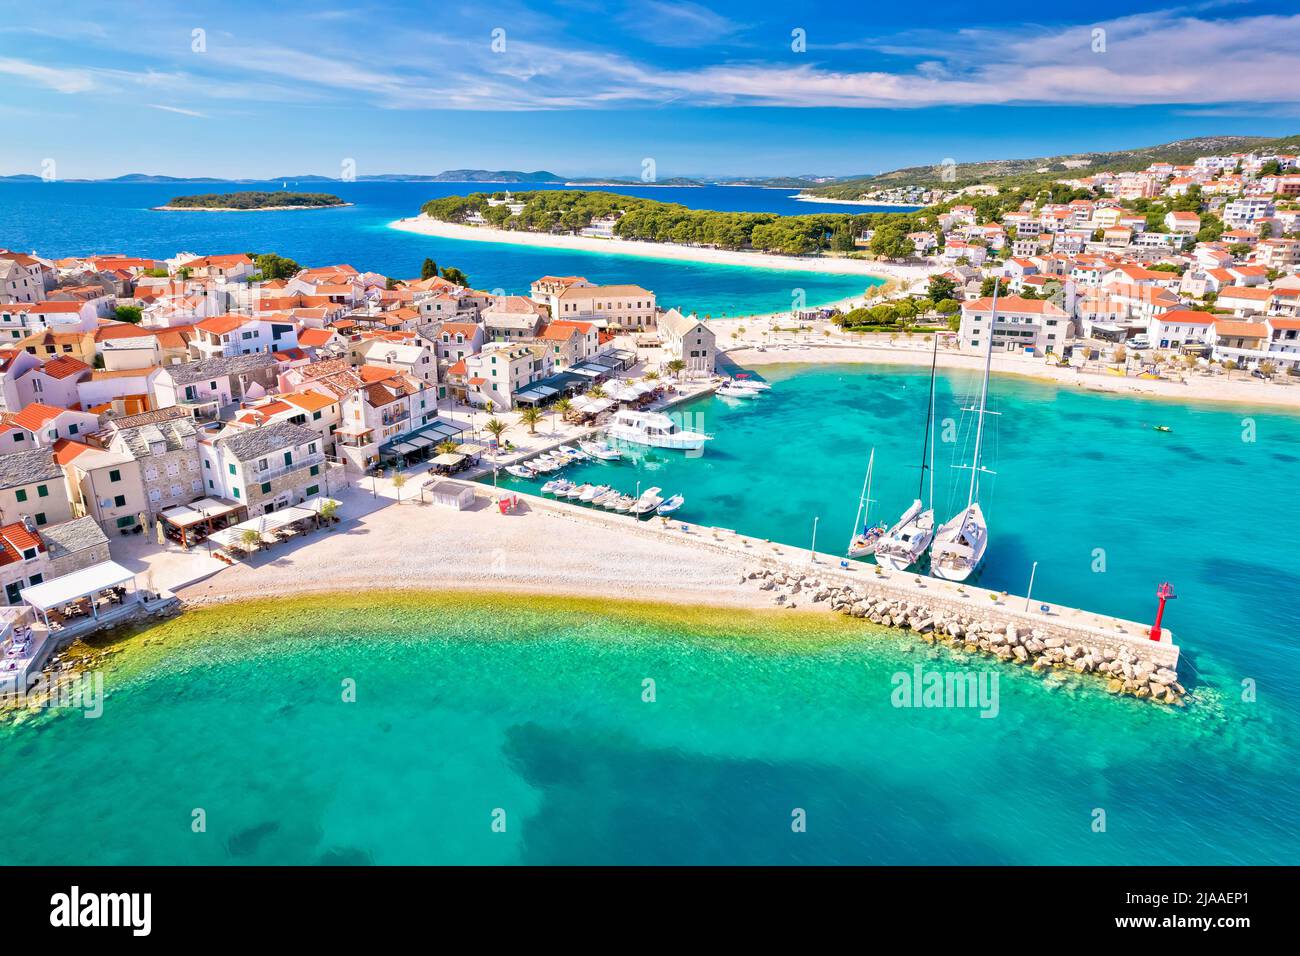 Adriatic tourist town of Primosten turquoise beach and seafront aerial view, Adriatic sea, Dalmatia region of Croatia Stock Photo